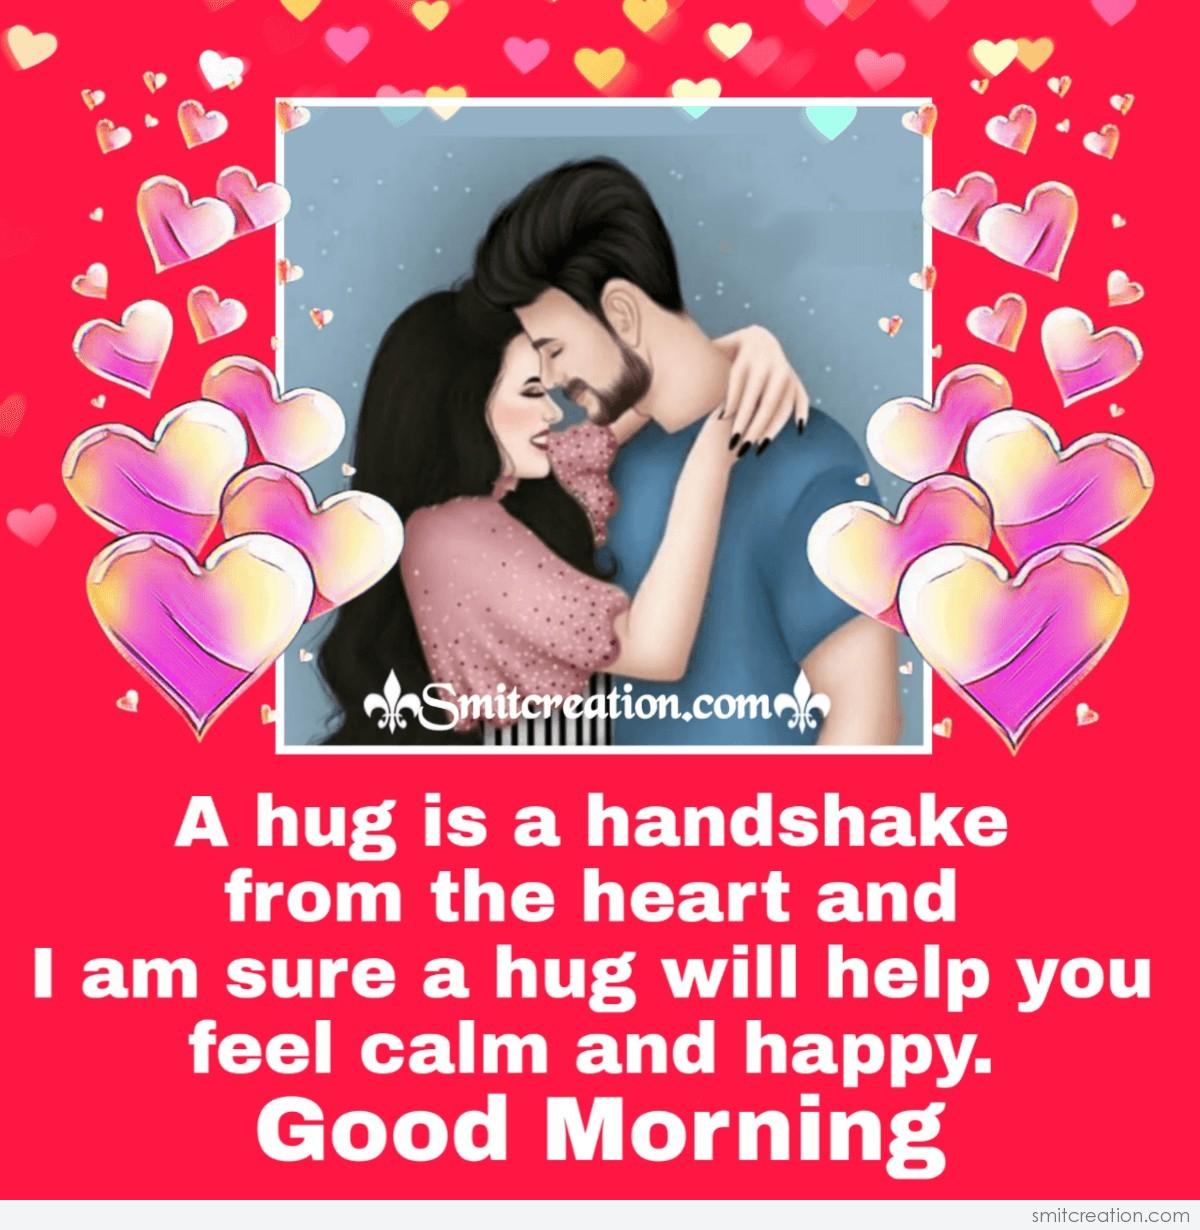 Good Morning Hug Quote - SmitCreation.com